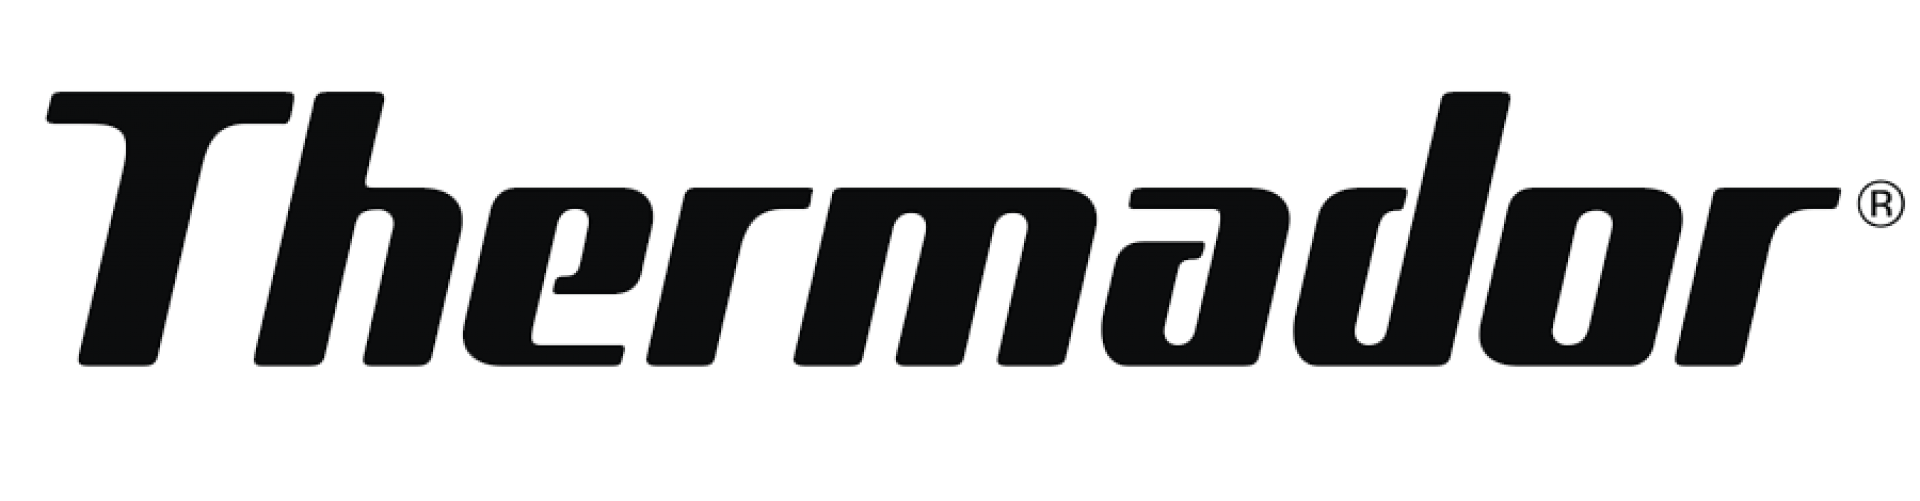 Thermador logo